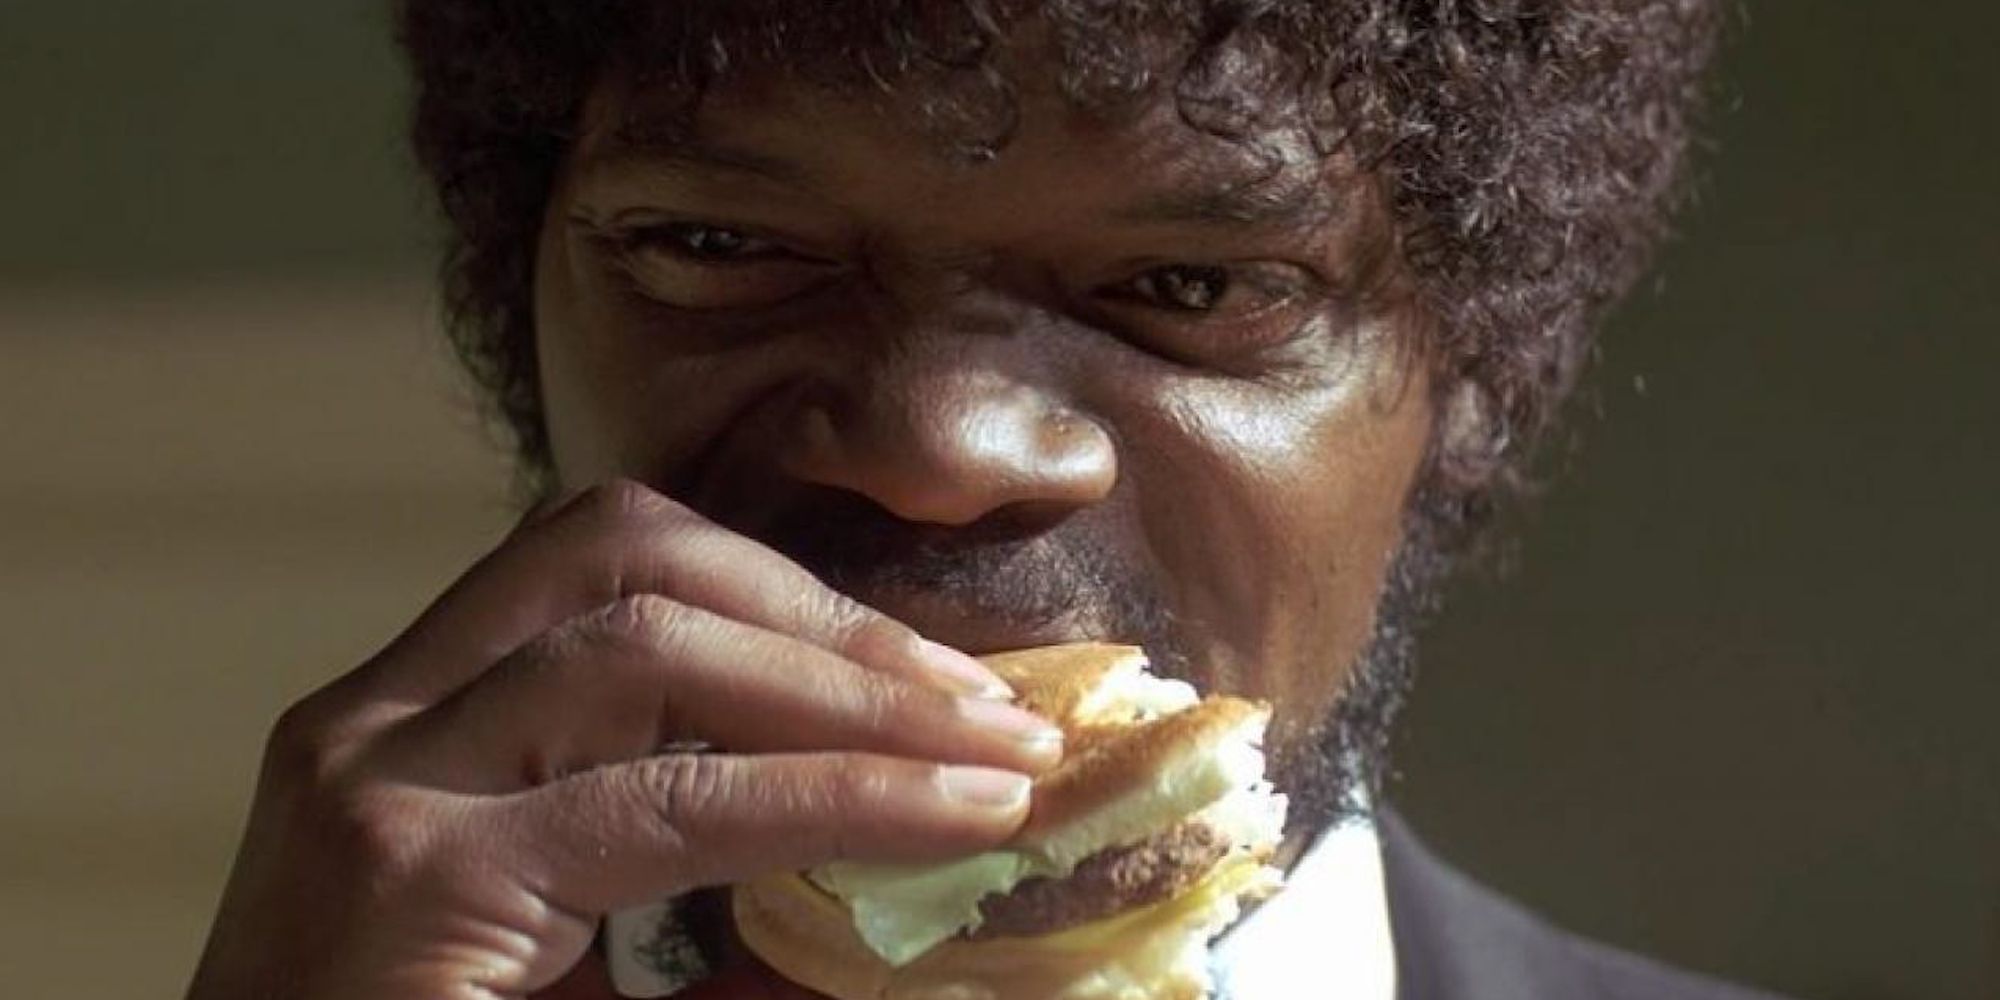 Jules eating a Big Kahuna burger in Pulp Fiction